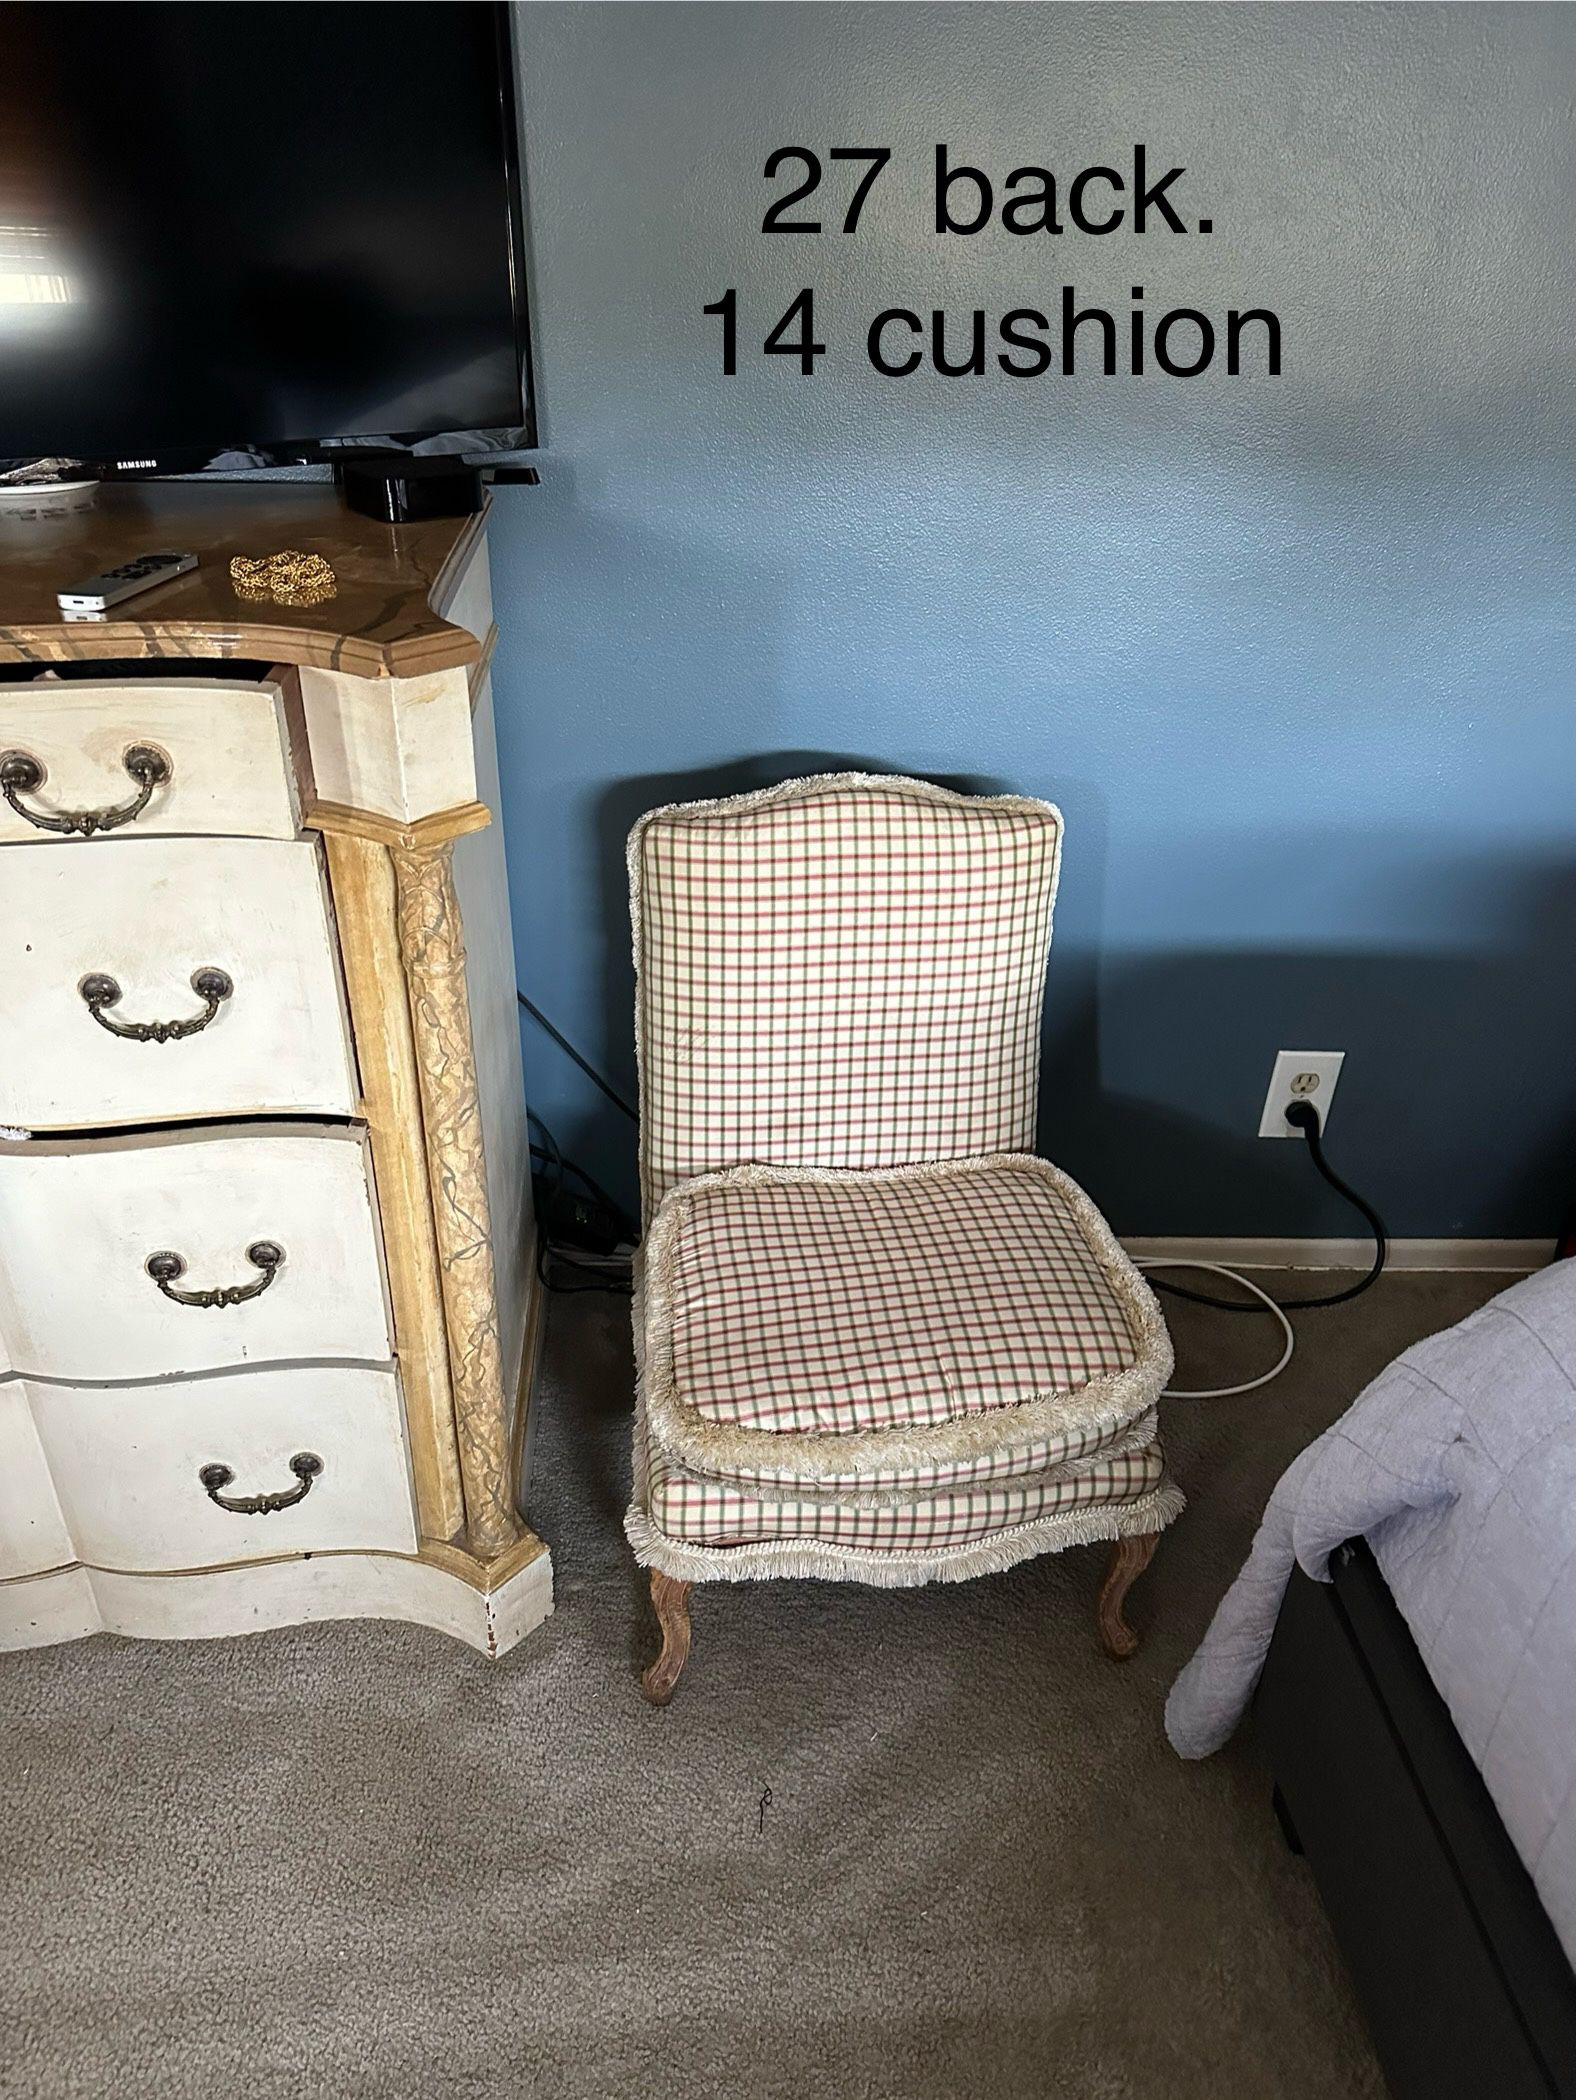 Antique Child’s Chair